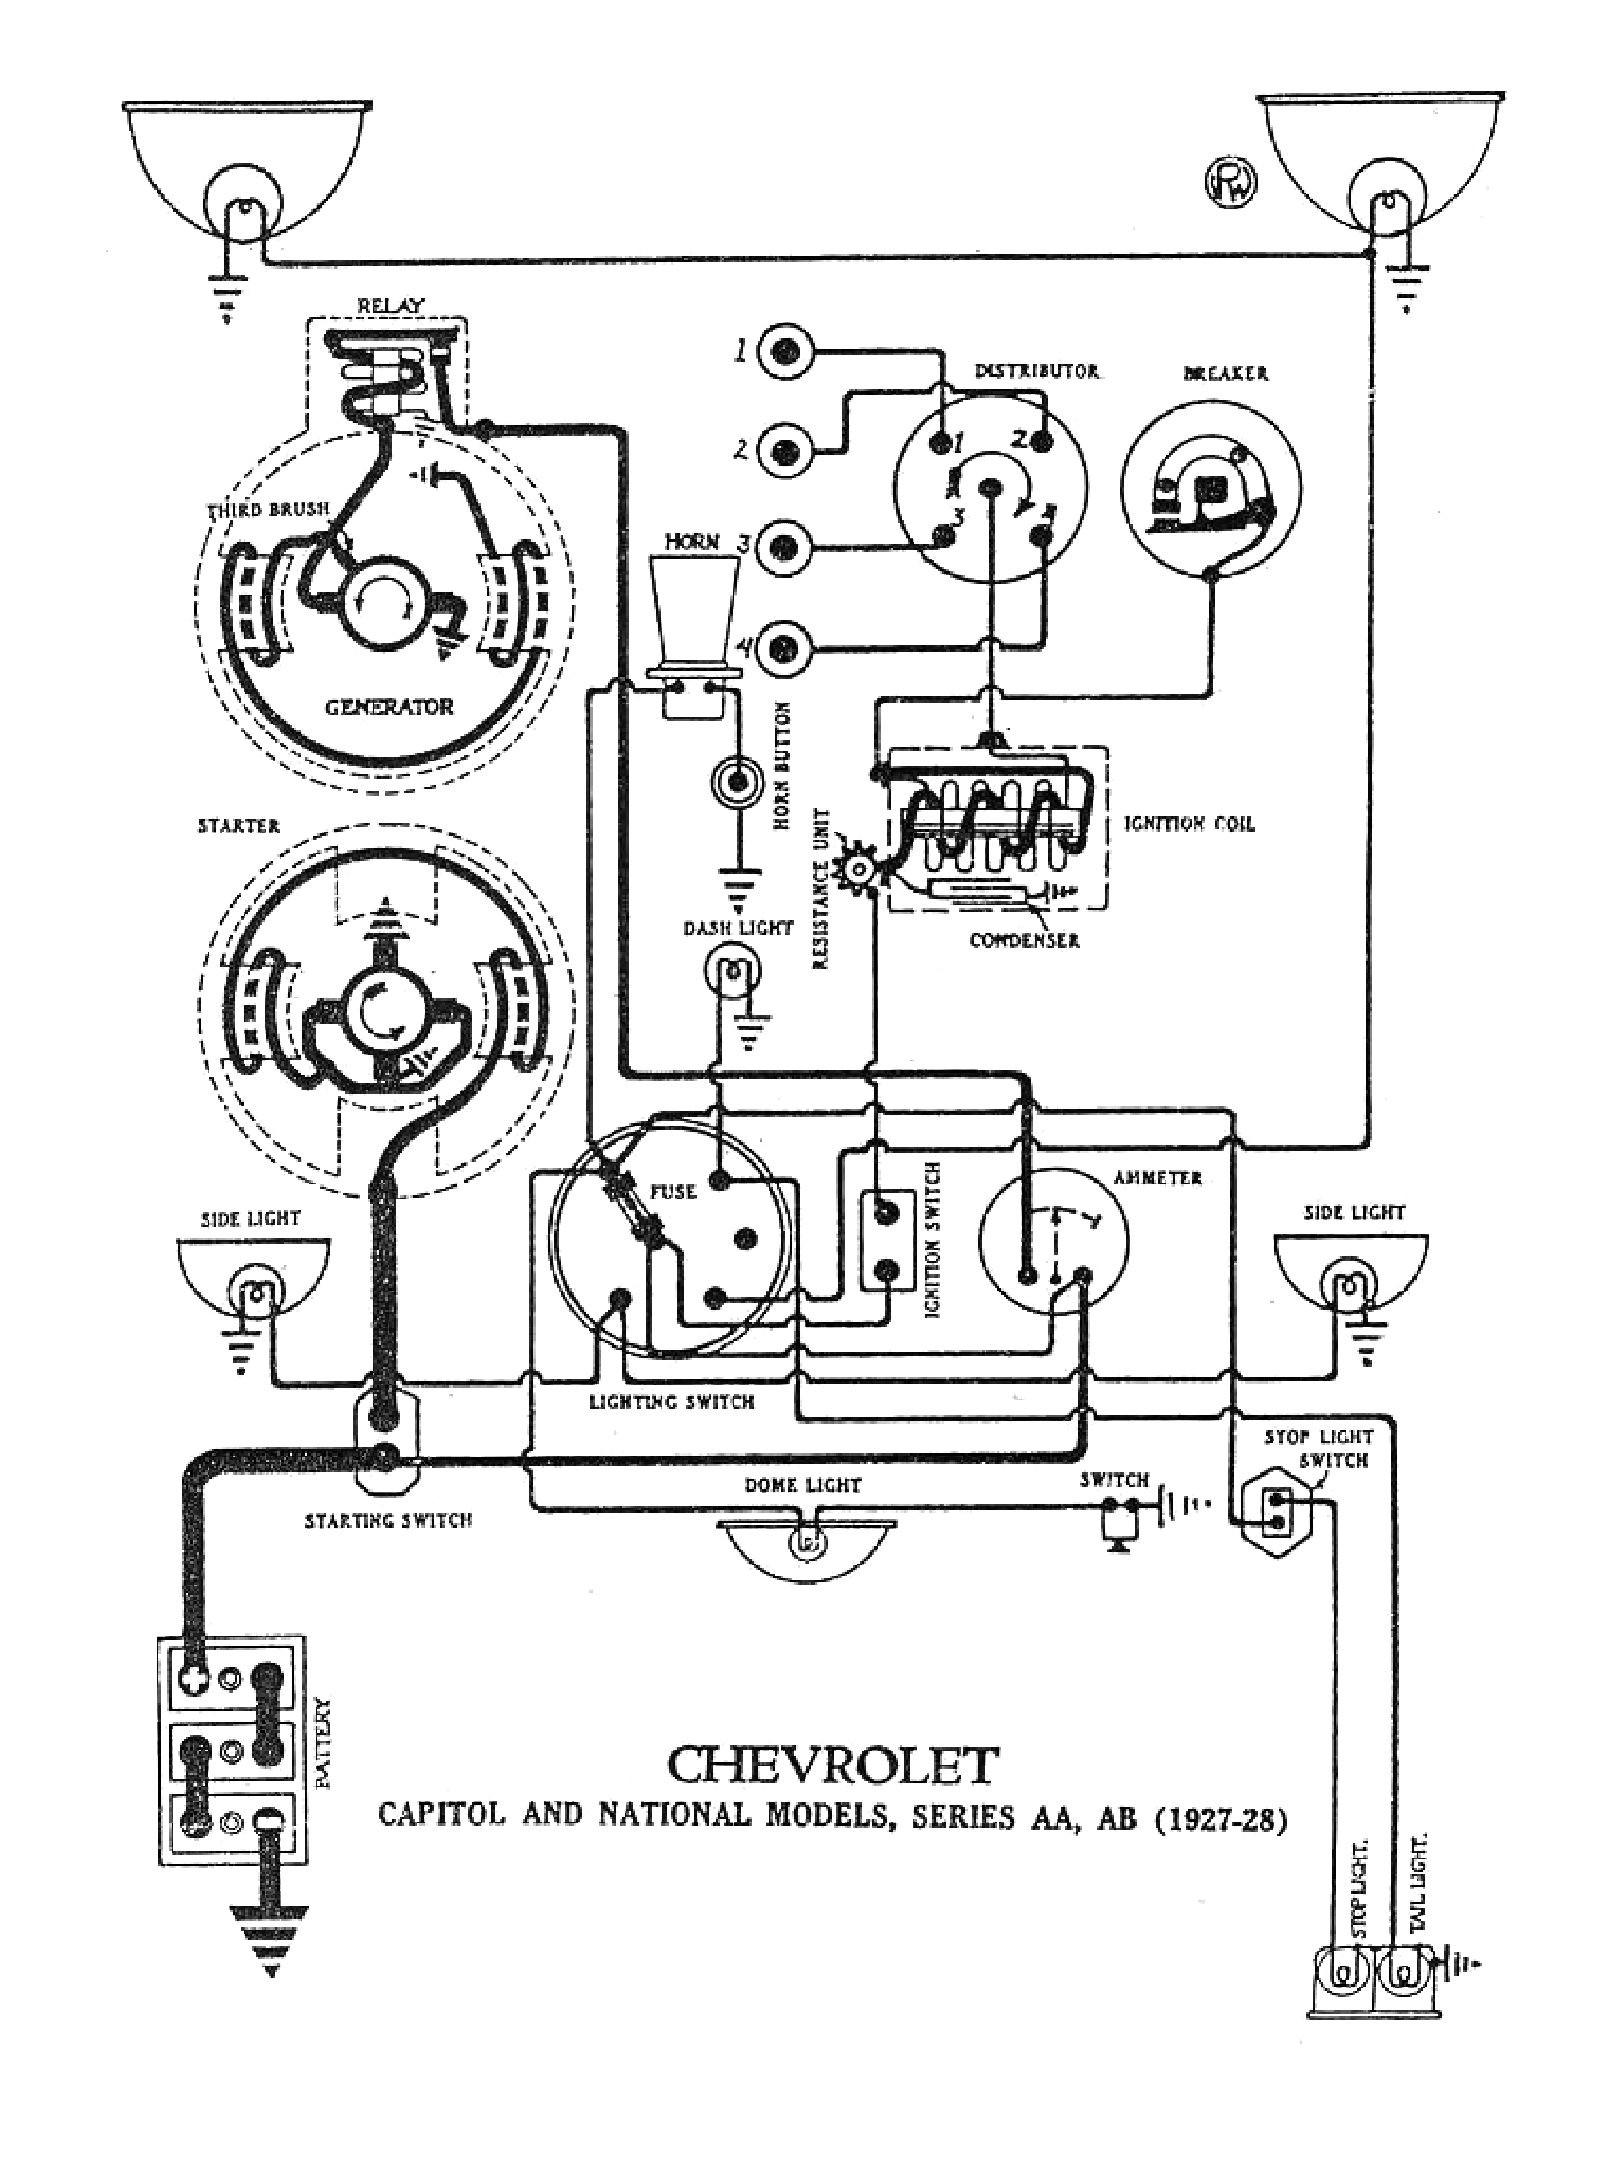 350 Engine Firing order Diagram Chevy Wiring Diagrams